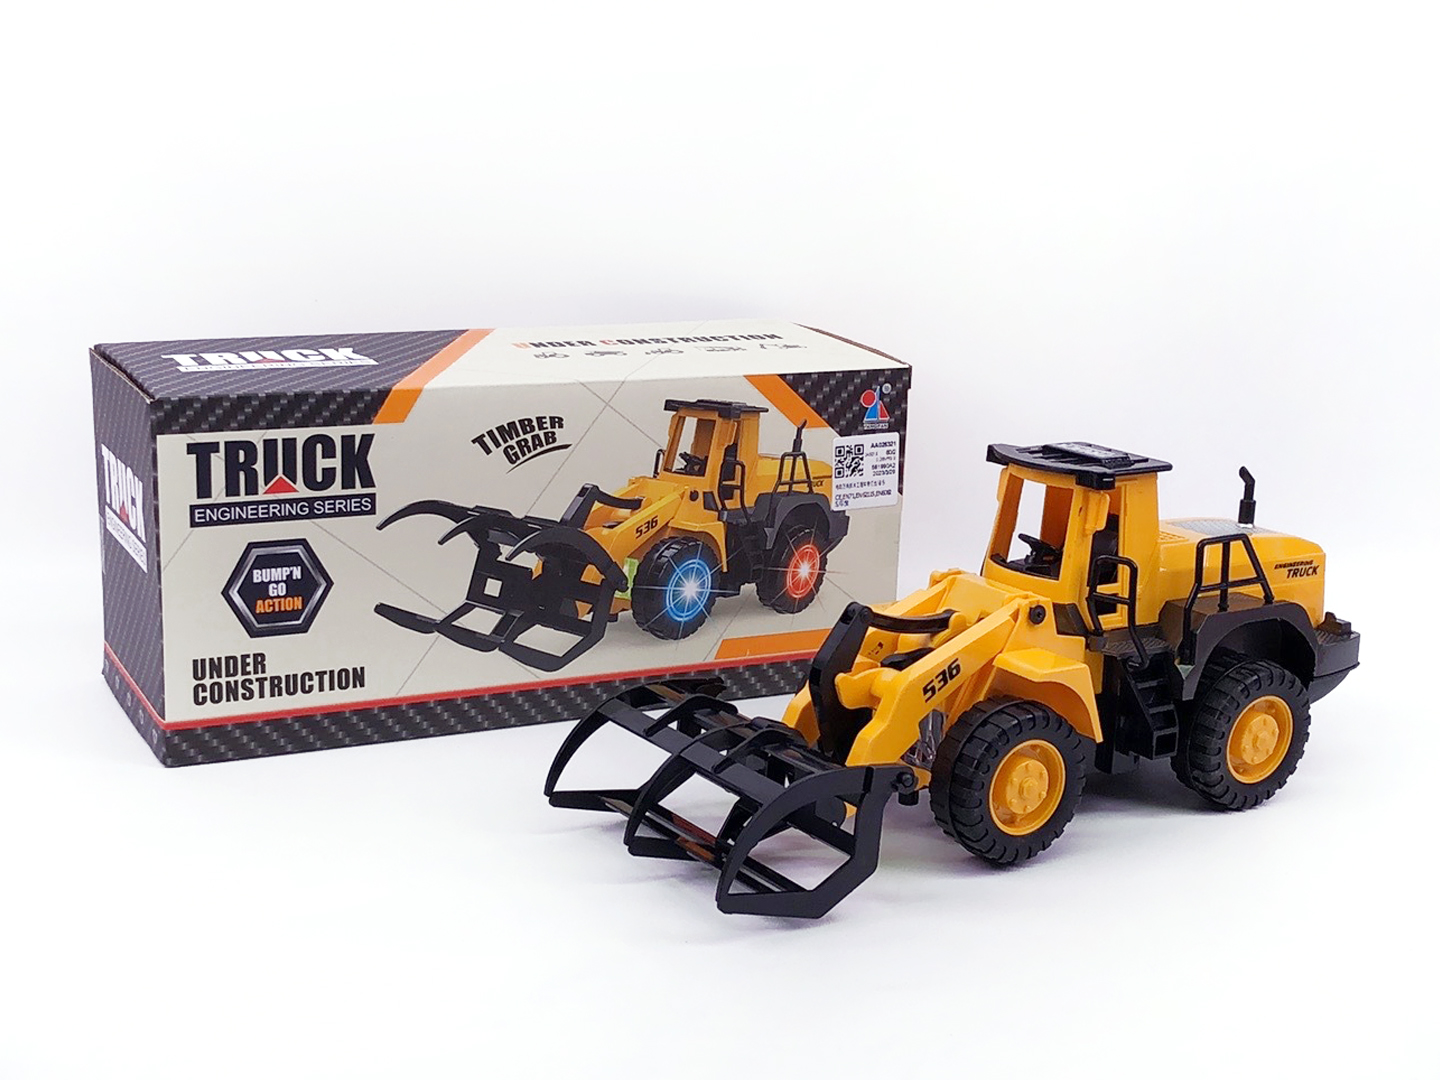 B/O universal Construction Truck W/L_M toys